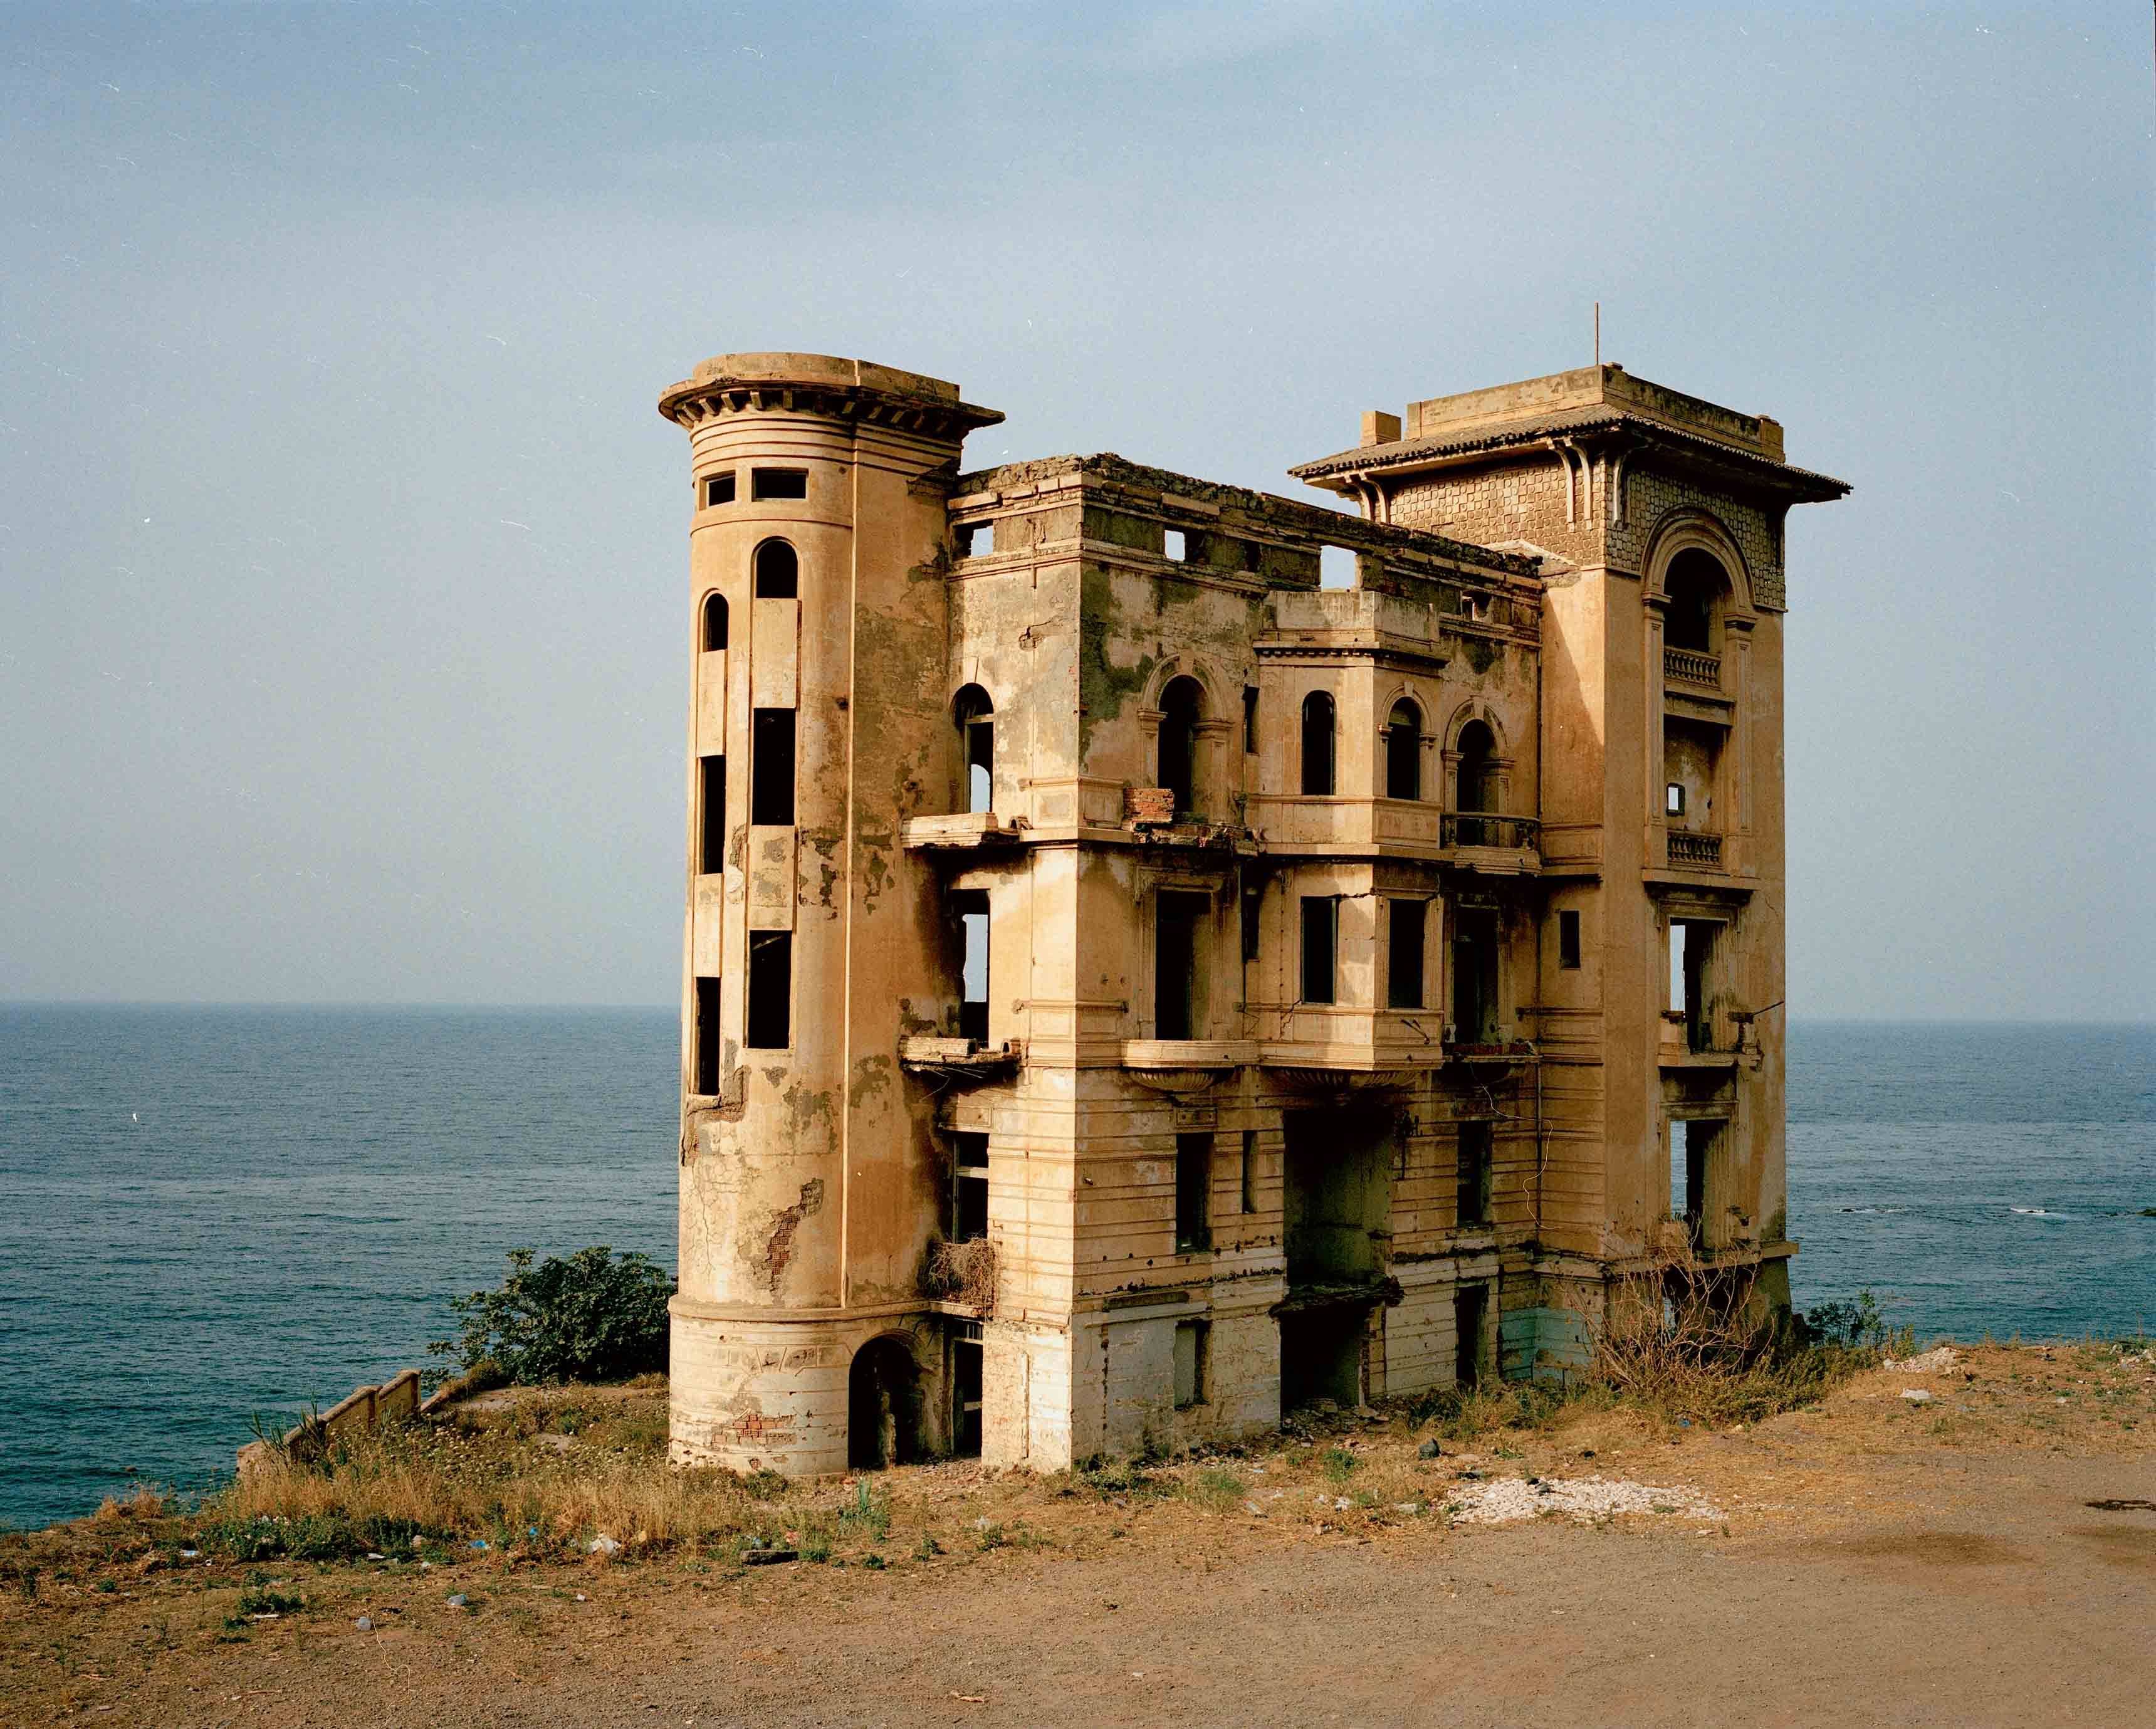 “Haunted House II” (2006), de Zineb Sedira. Photographie couleur, 80 x 100 cm.